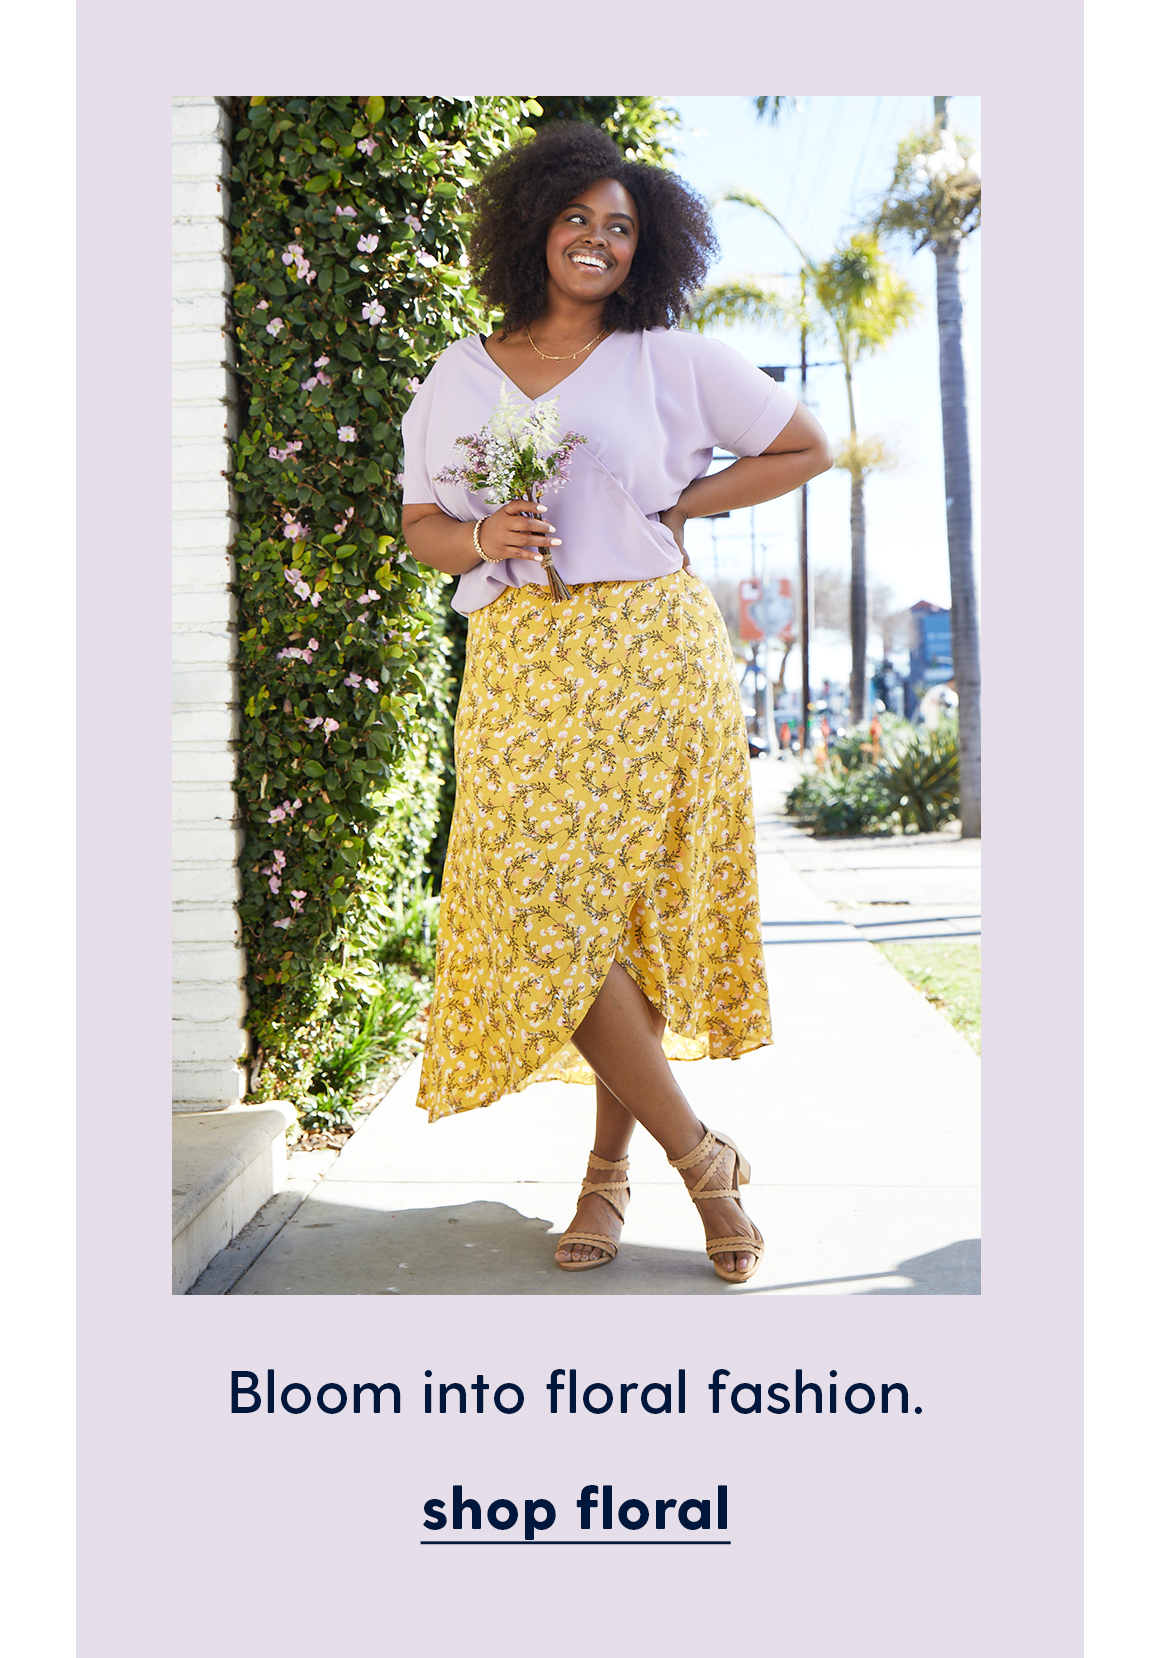 Bloom into floral fashion. Shop floral. 